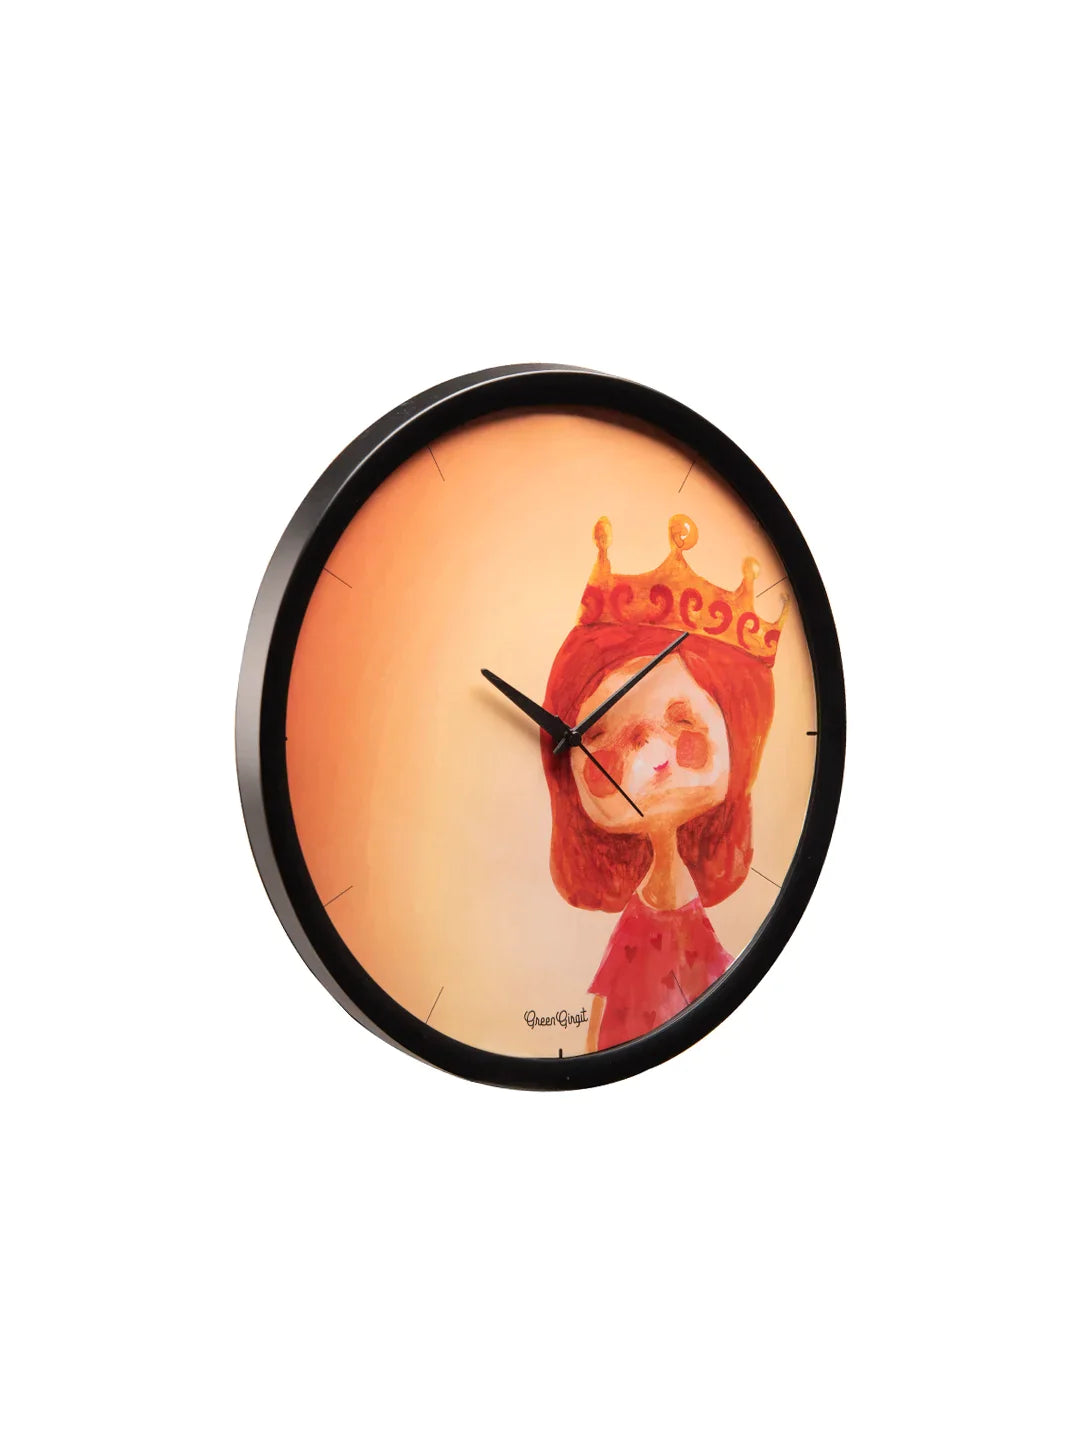 Snooty princess Multicolor 13.5 Inch Plastic Analog Wall Clock